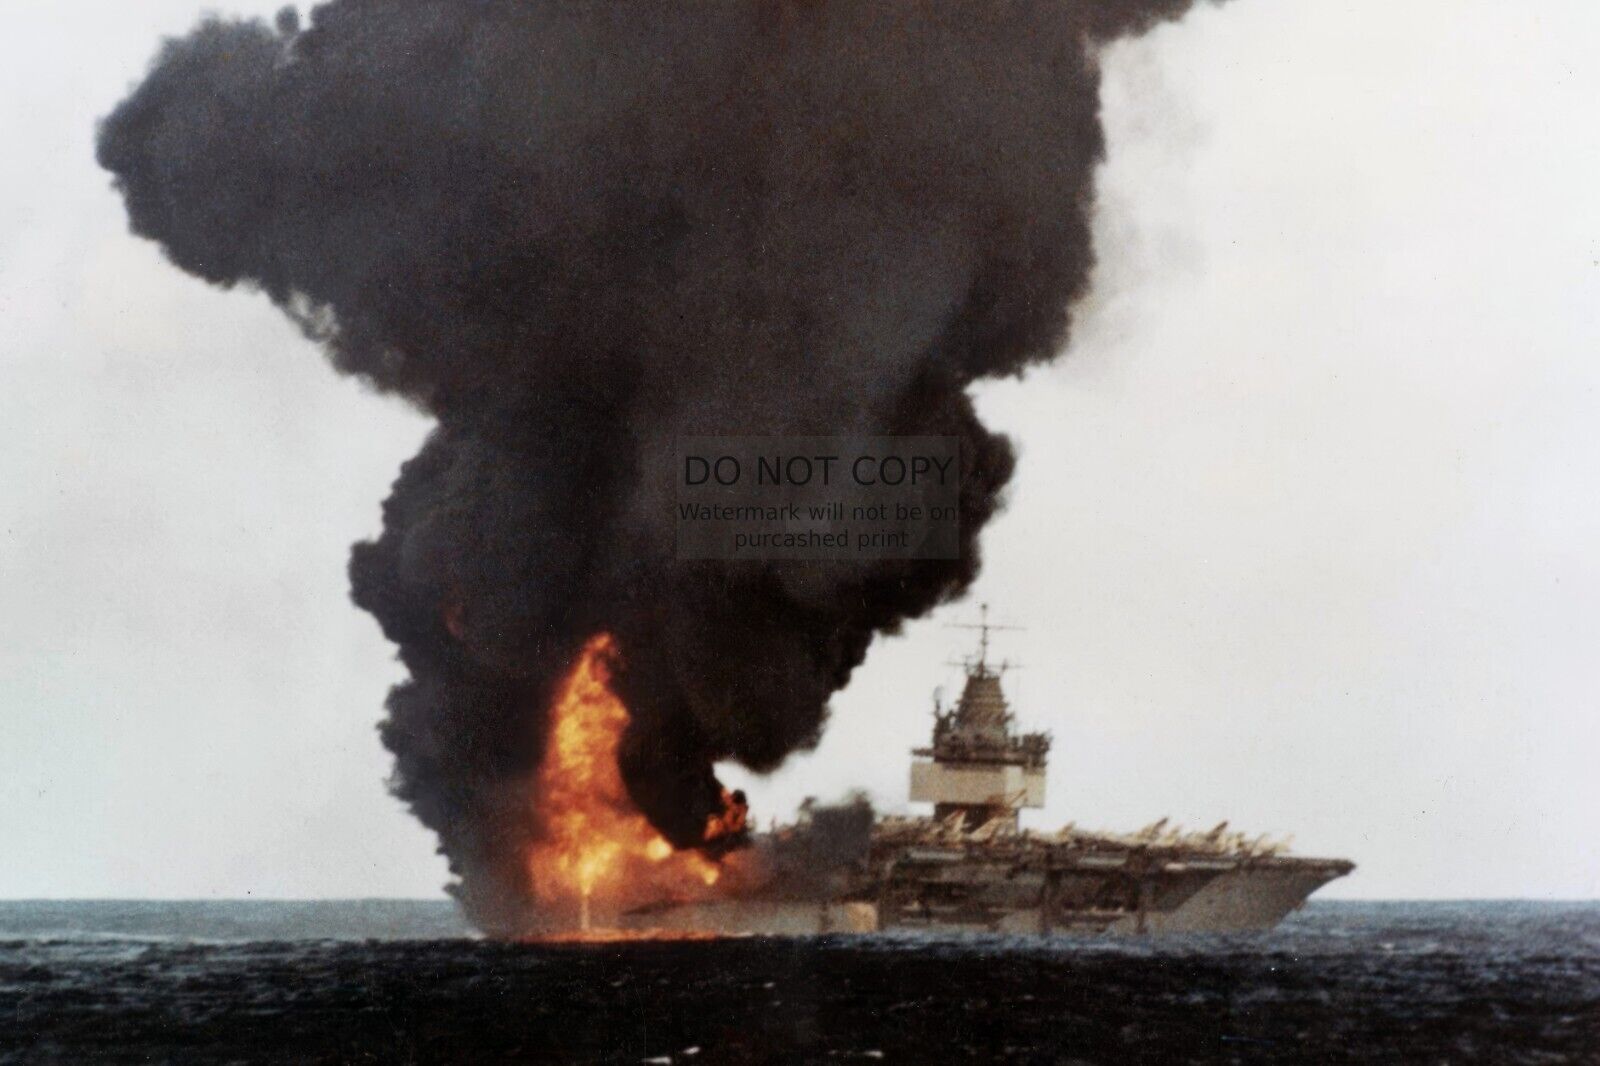 USS ENTERPRISE STERN BURNING AFTER ACIDENTAL EXPLOSION 4X6 NAVY PHOTO POSTCARD